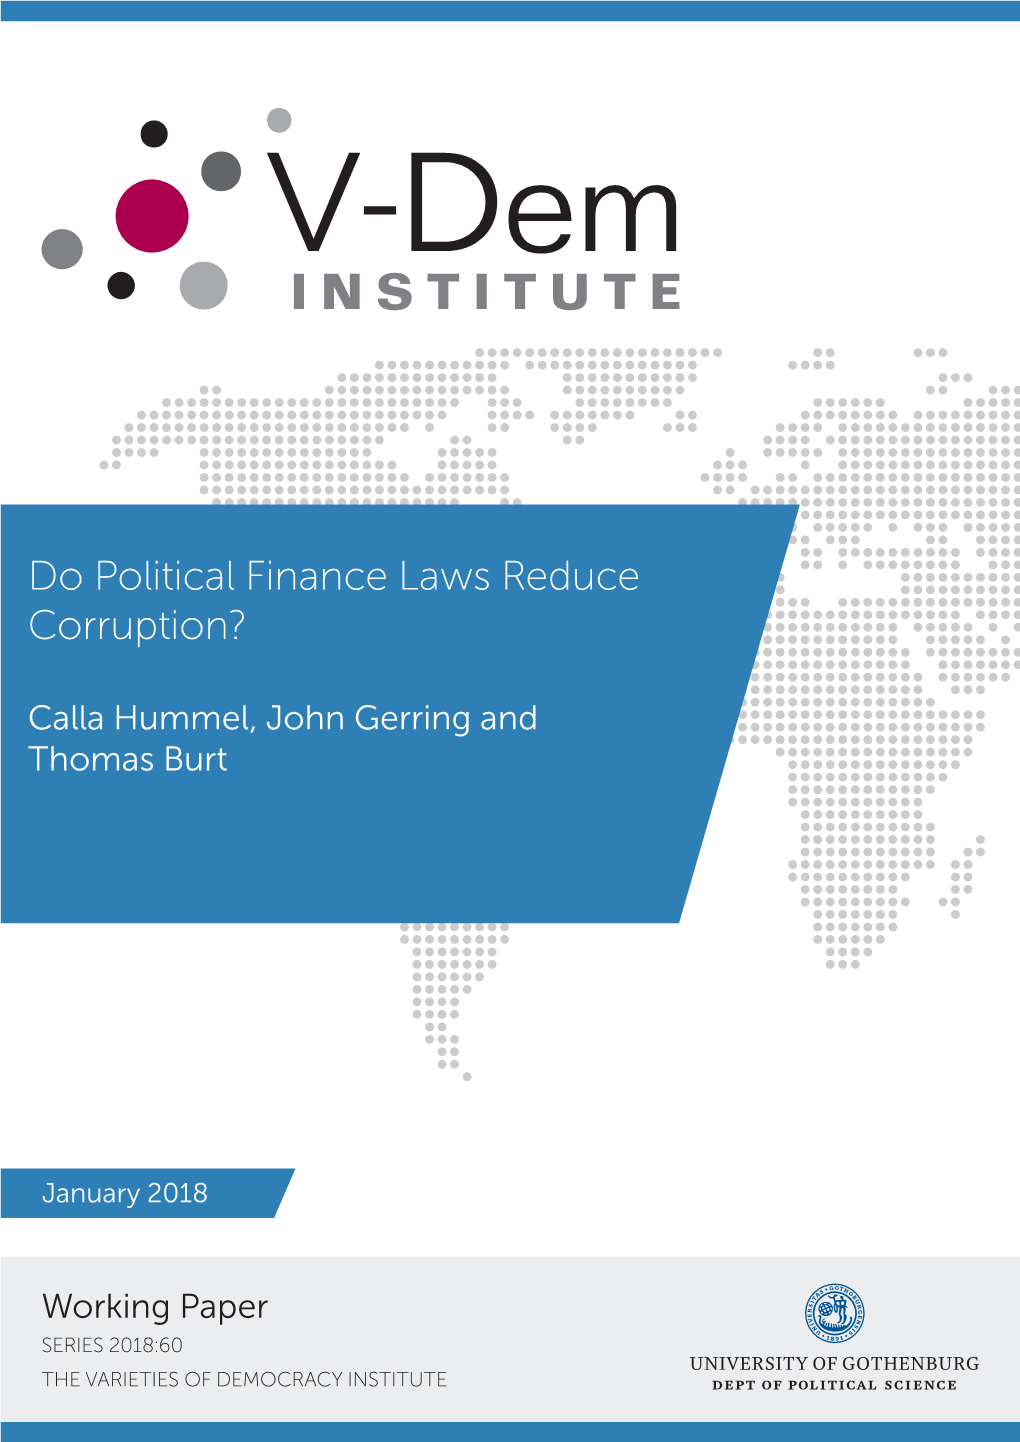 Do Political Finance Laws Reduce Corruption?